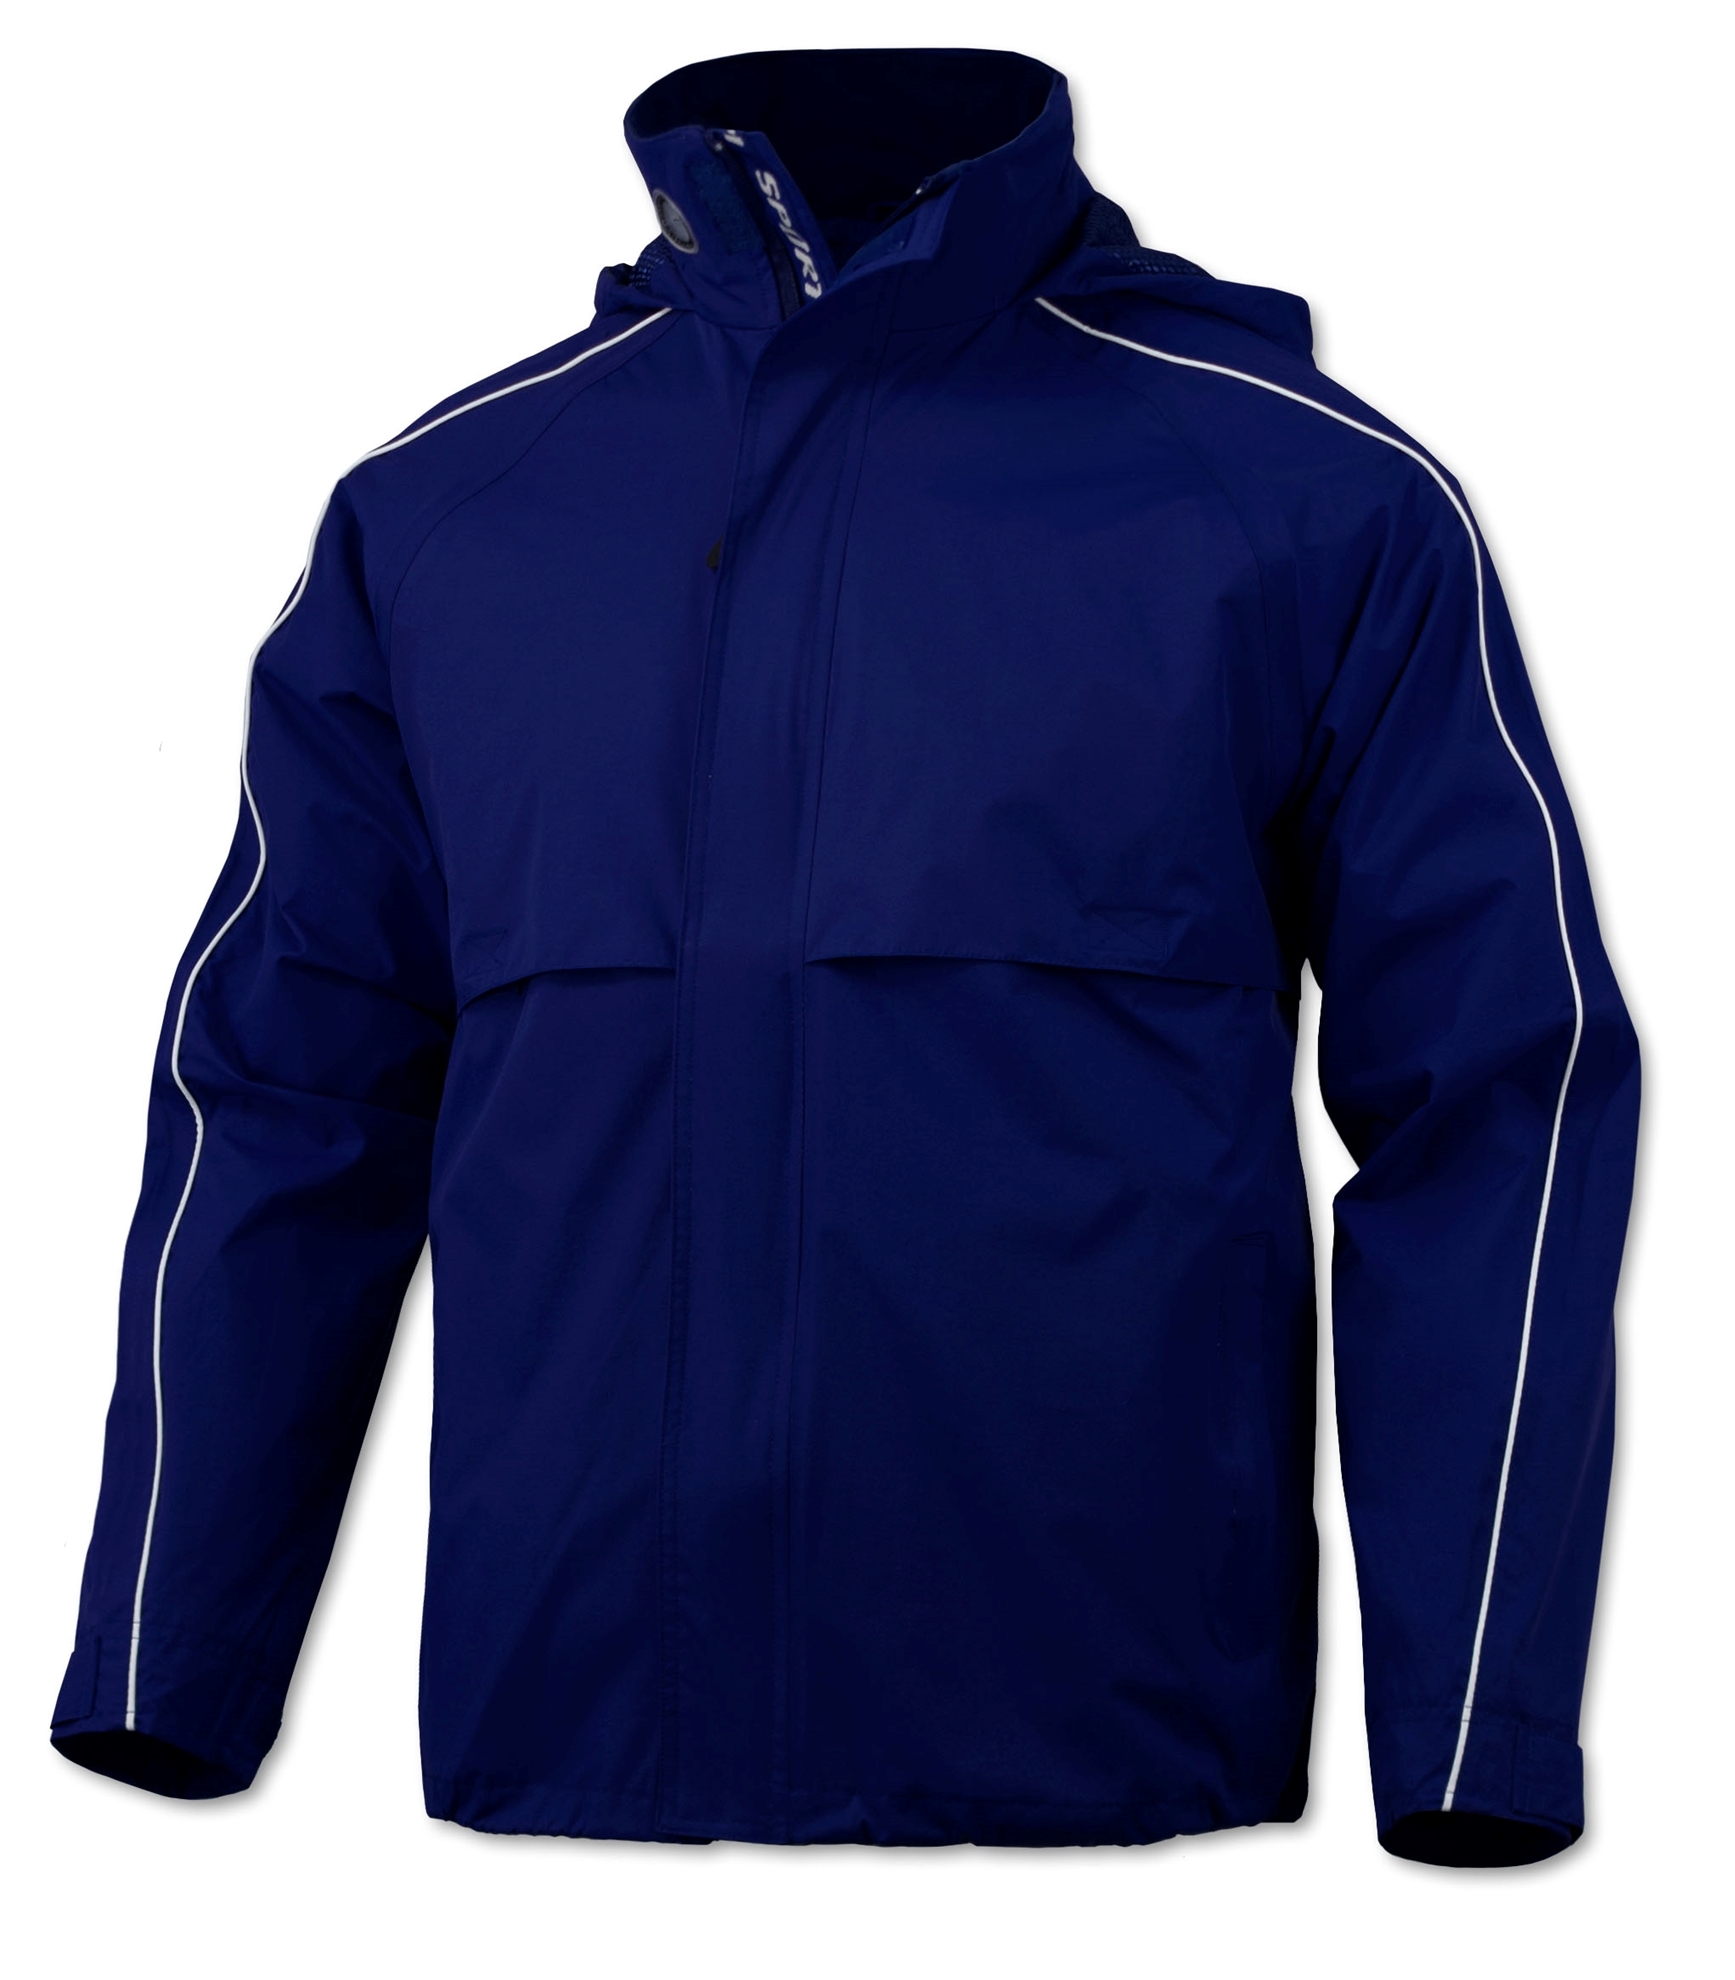 BAW Athletic Wear JS009J - Adult Rain Stop Jacket